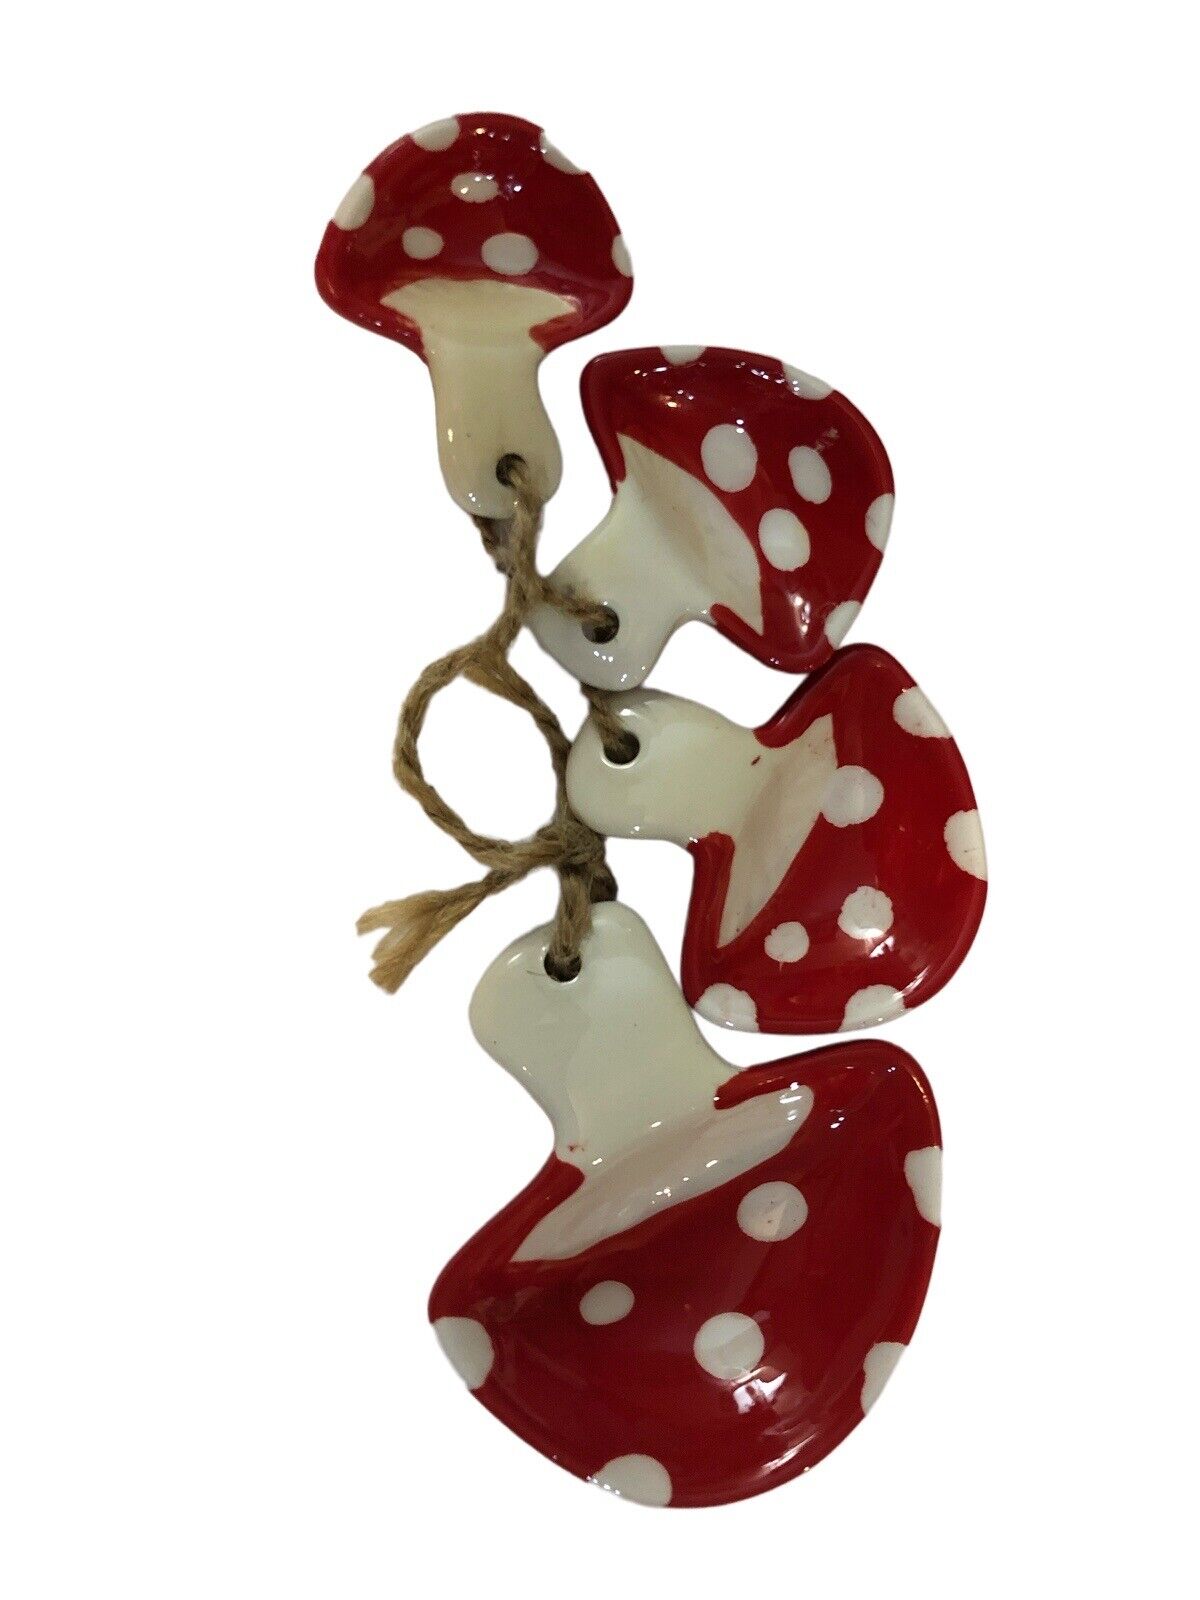 Mushroom Design Ceramic Measuring Spoon Set - Very Cute - No Chips Or Cracks